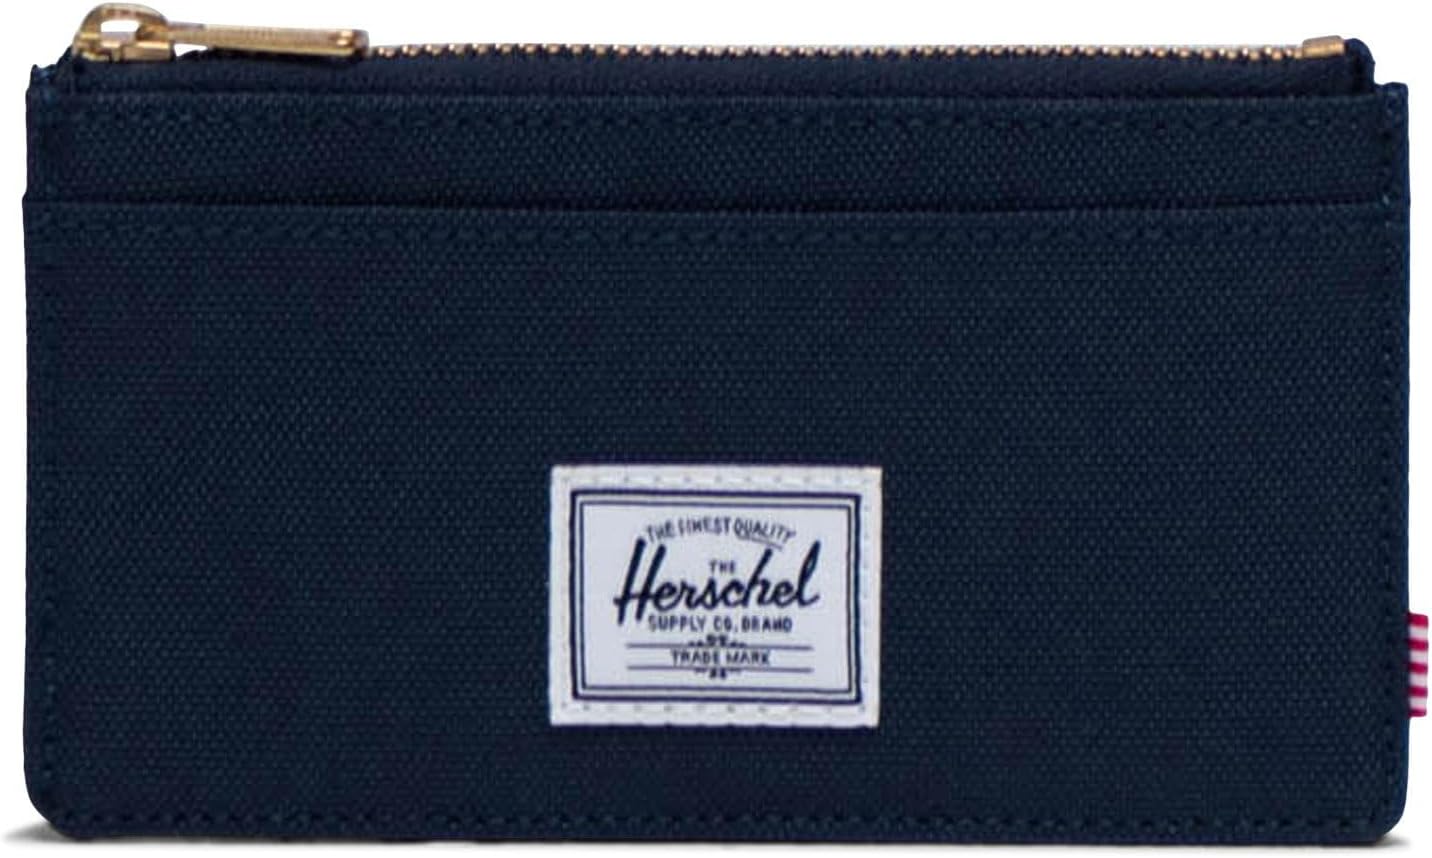 Кошелек Oscar Large Cardholder Herschel Supply Co., темно-синий цена и фото